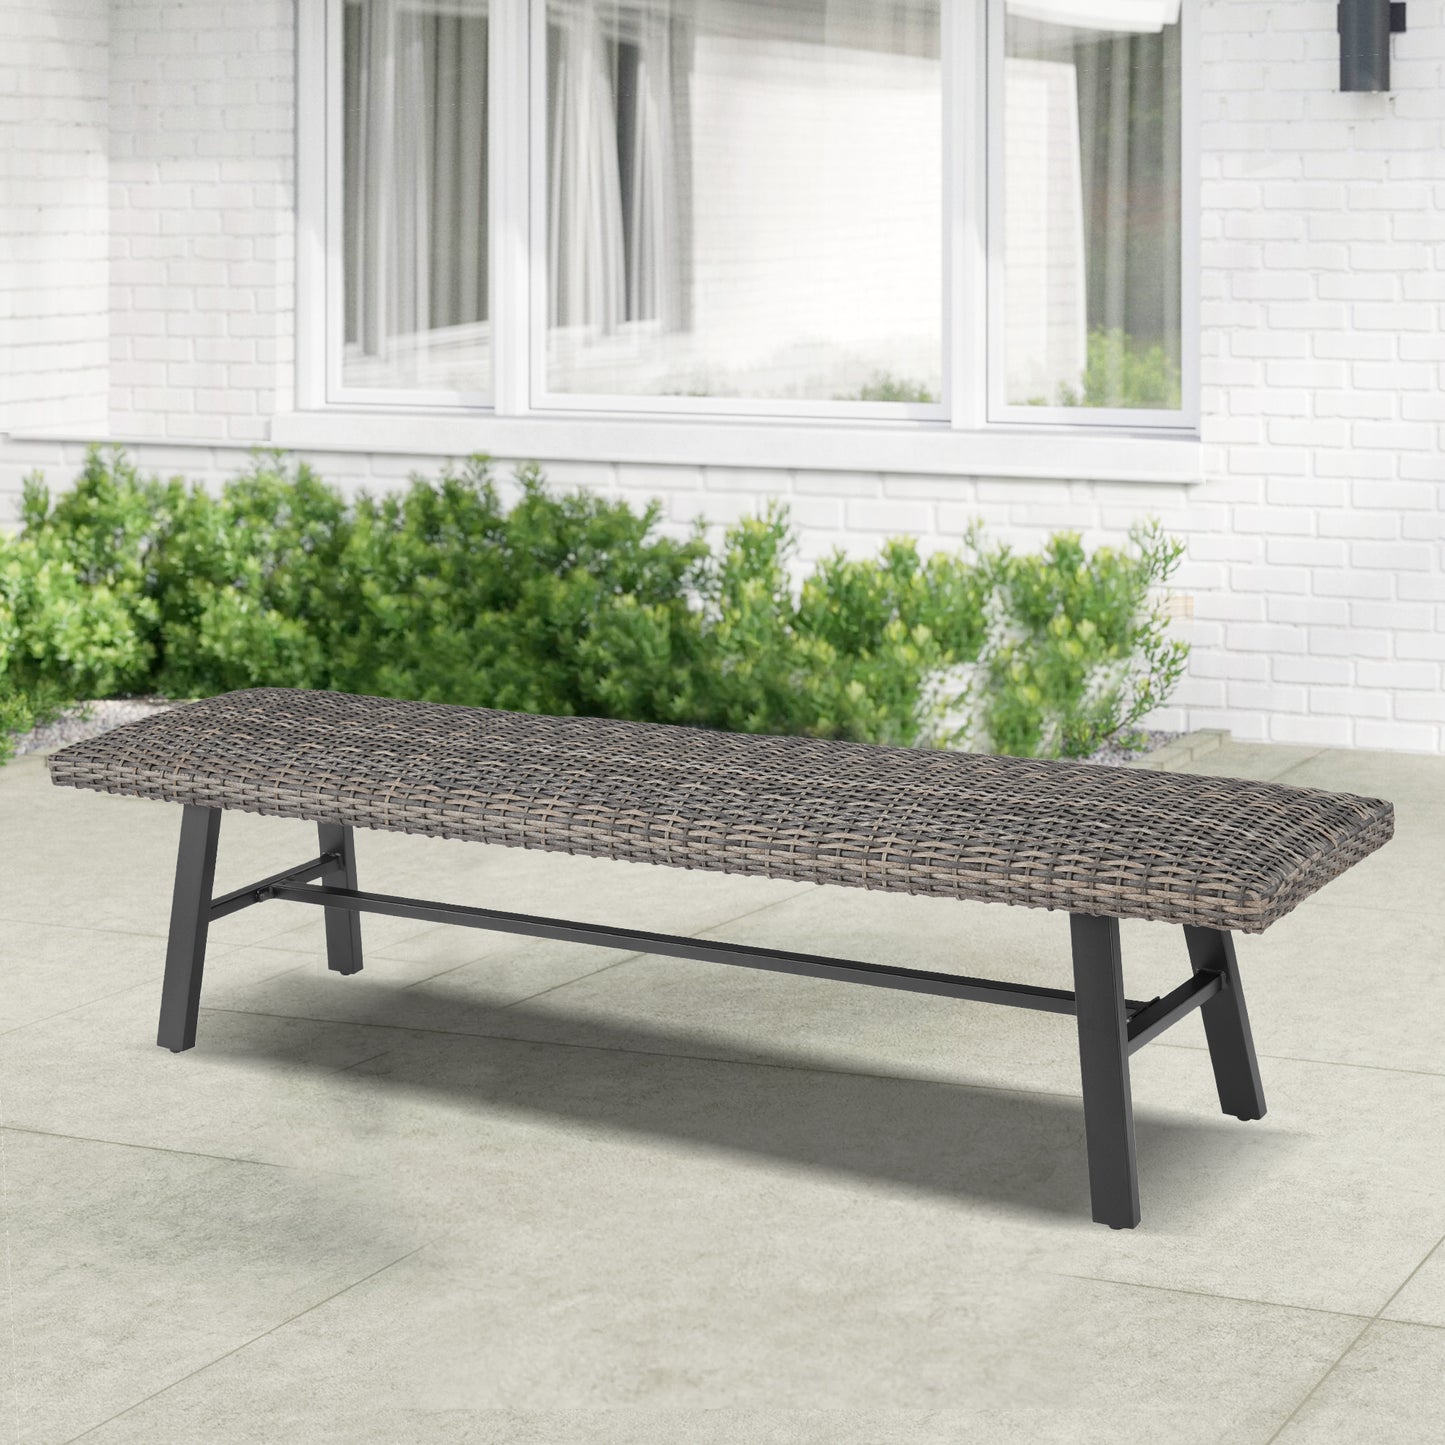 70” Outdoor Bench All-weather Wicker Patio Garden Bench, Mix Gray